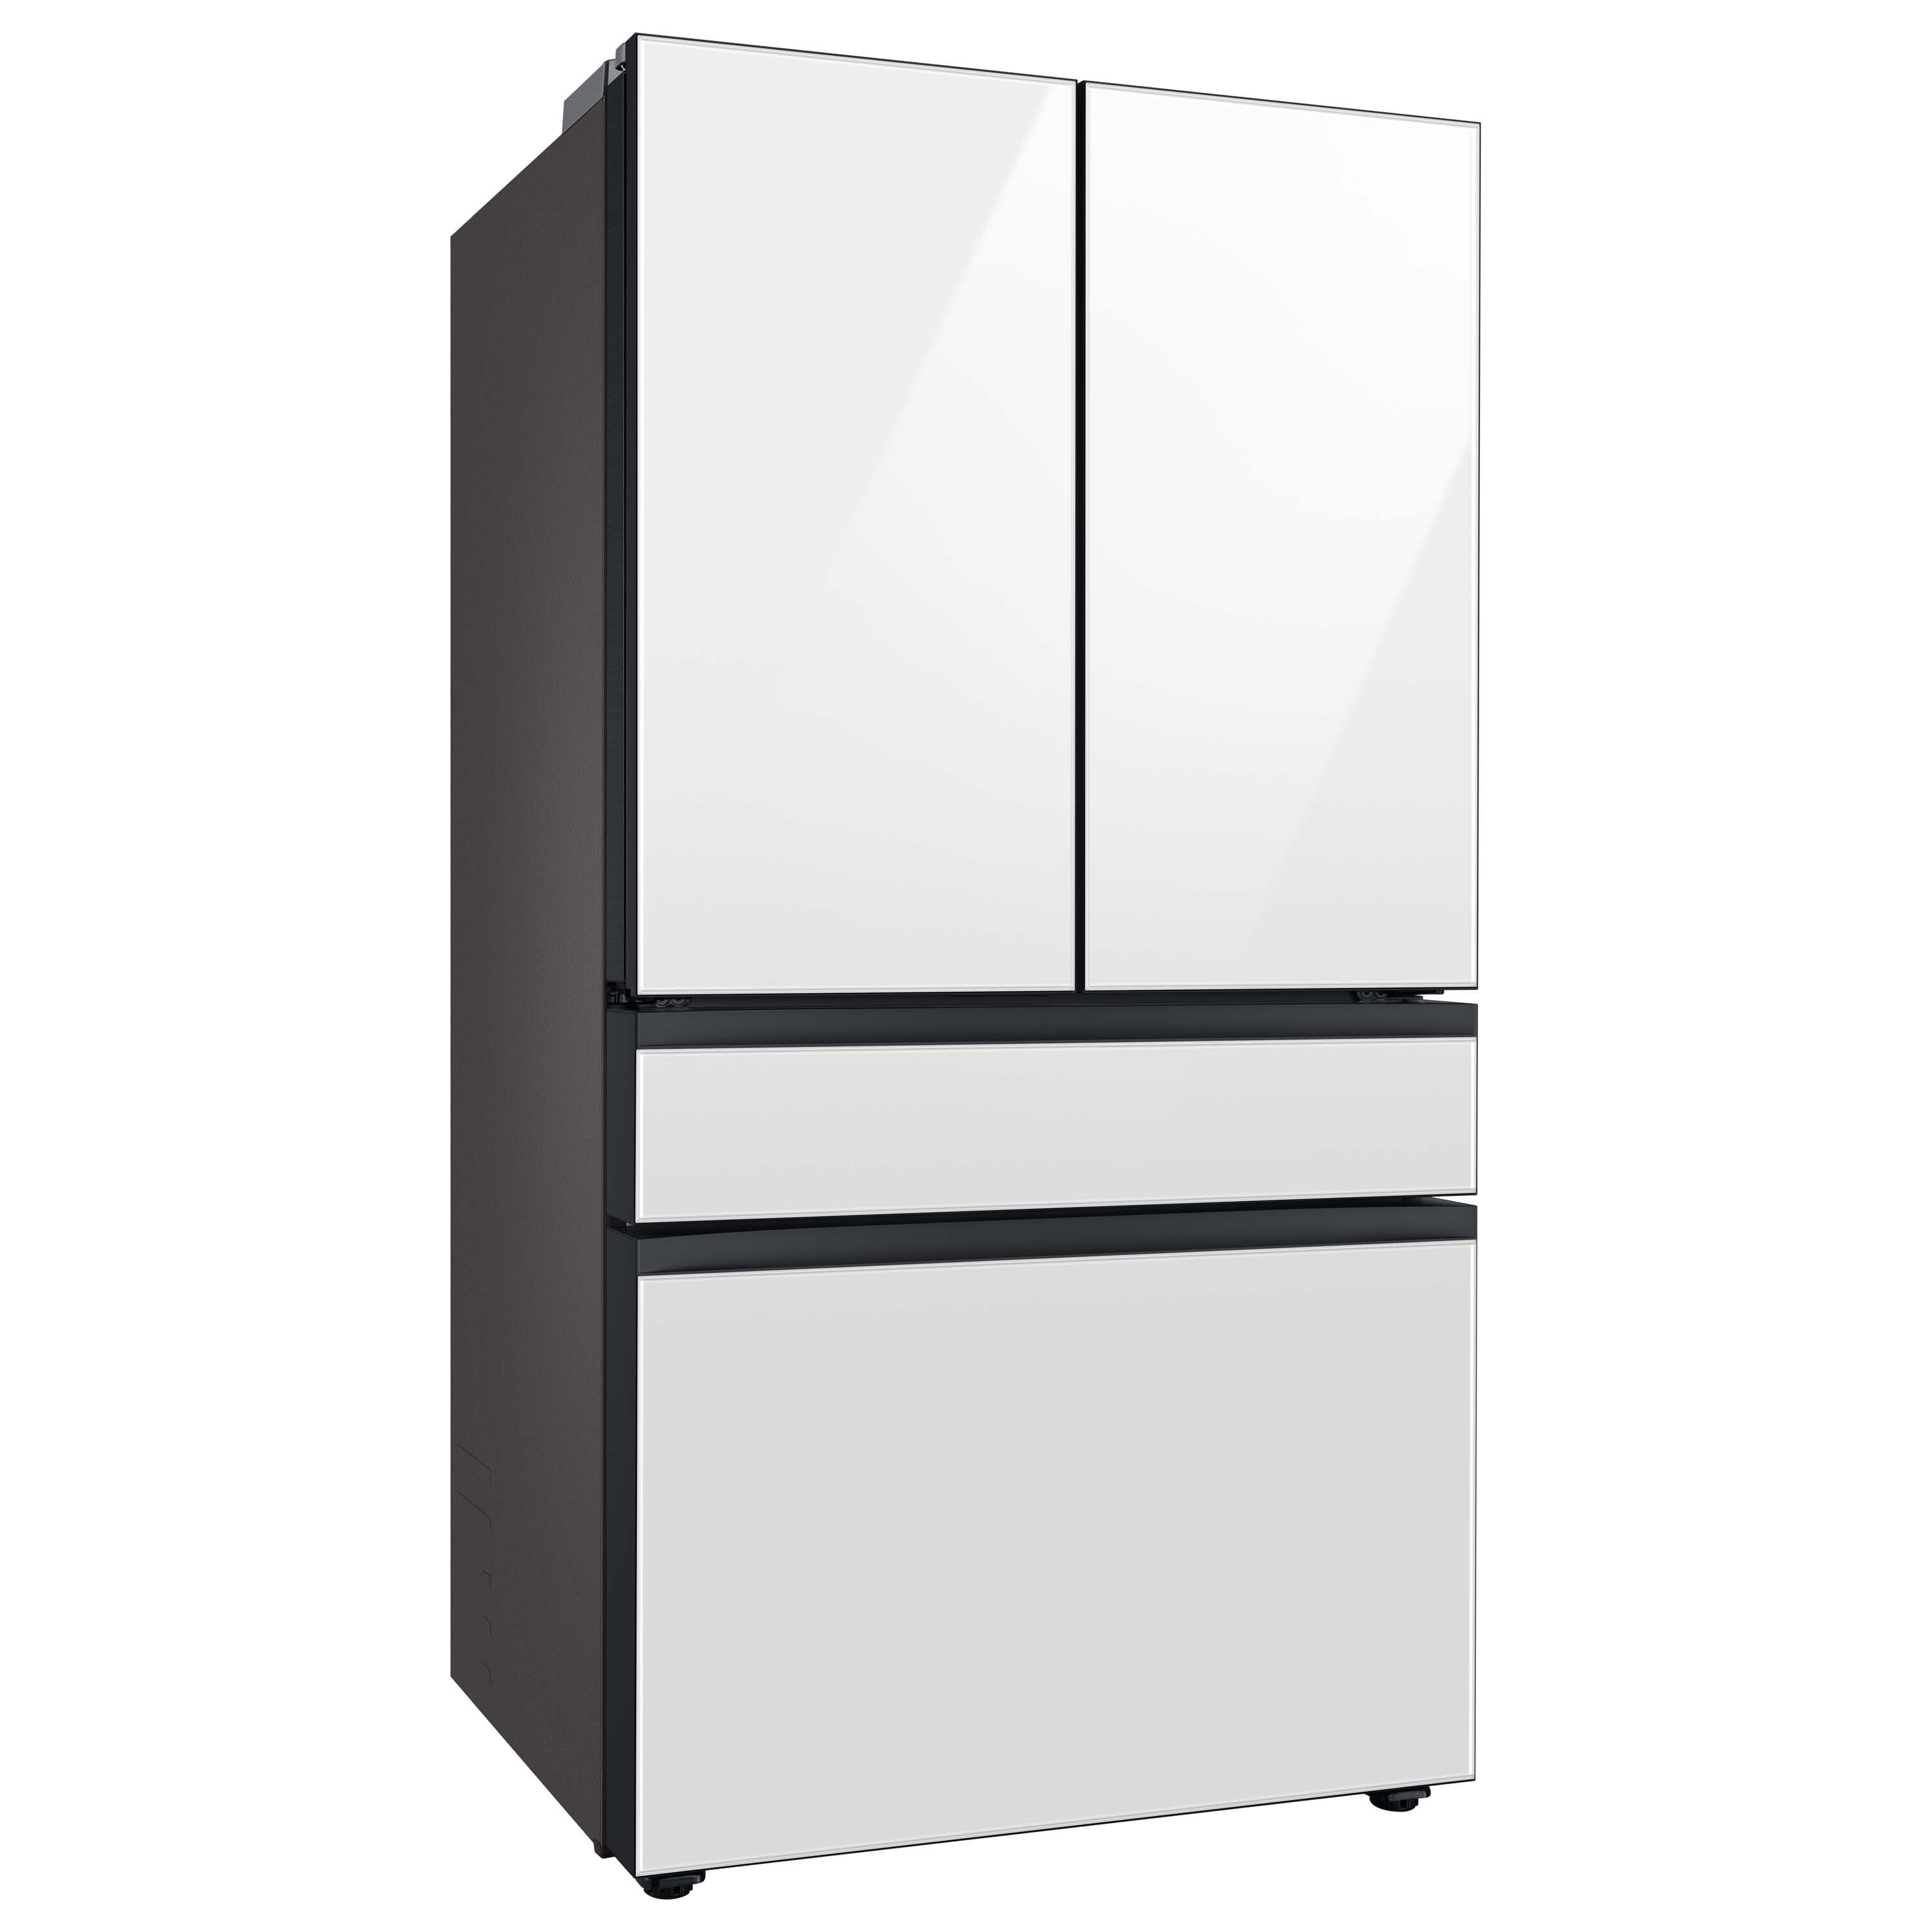 Samsung BESPOKE 29 Cu. ft. 4-Door French Door Refrigerator with AutoFill Water Pitcher - RF29BB8200 Stainless Steel